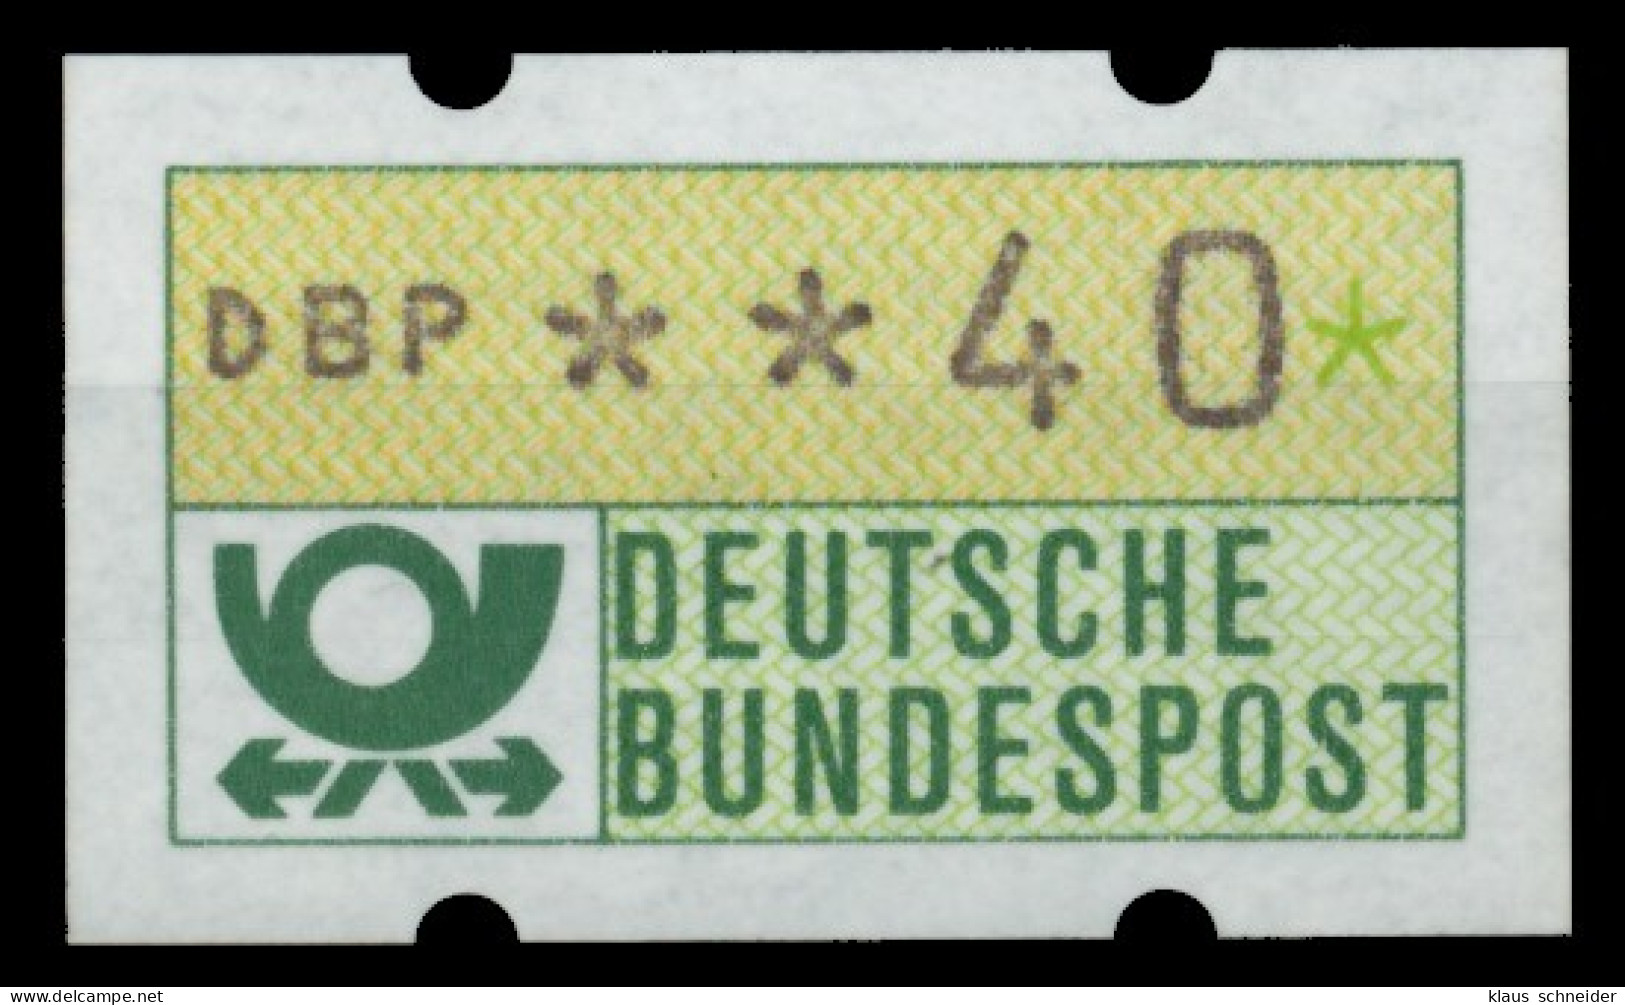 BRD ATM 1981 Nr 1-2-040 Postfrisch S2E313A - Machine Labels [ATM]